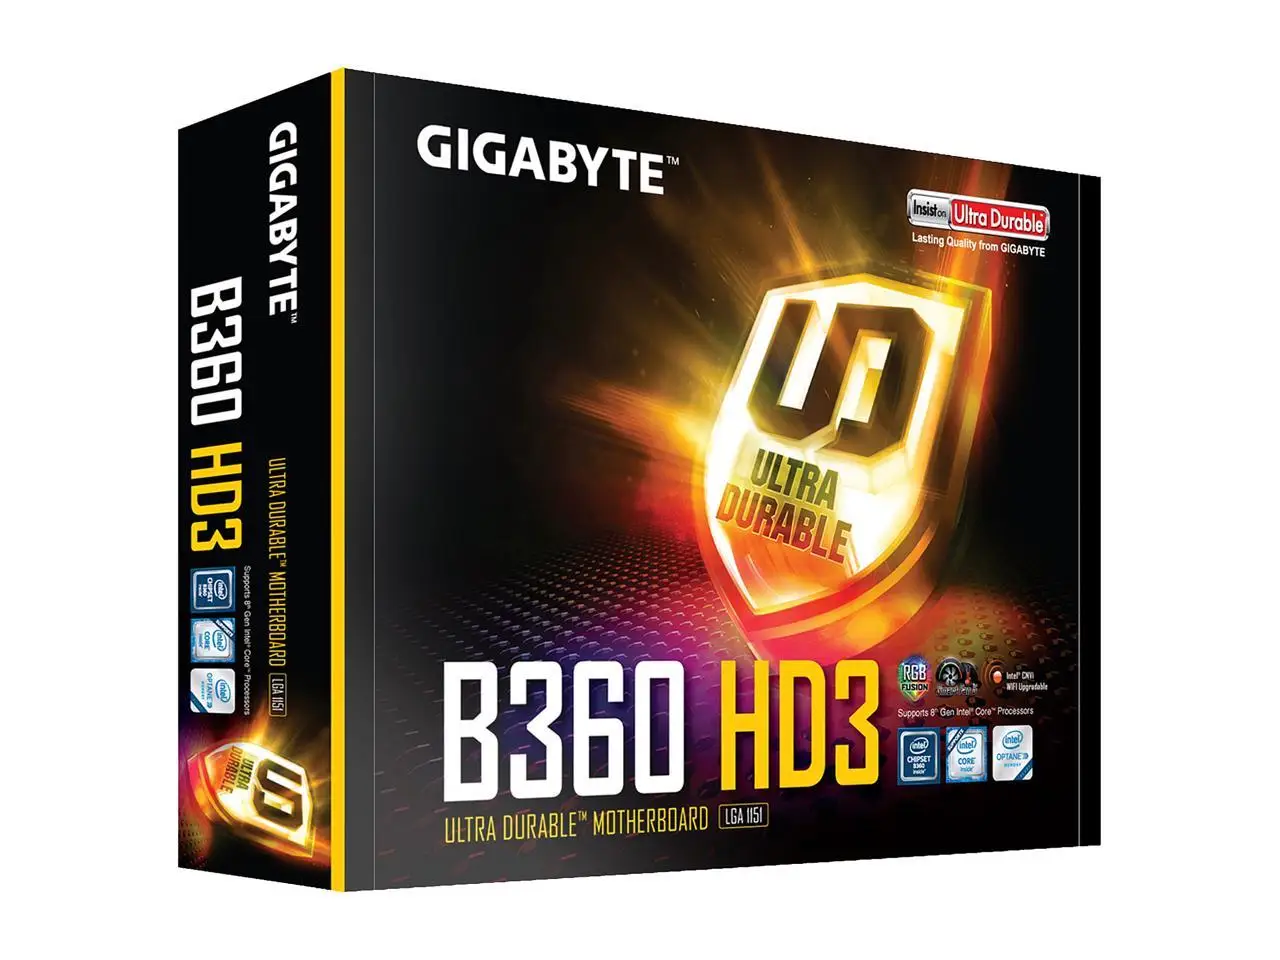 

For GIGABYTE B360 HD3 Motherboard LGA 1151 (300 Series) Intel B360 HDMI SATA 6Gb/s USB 3.1 ATX Intel Motherboard